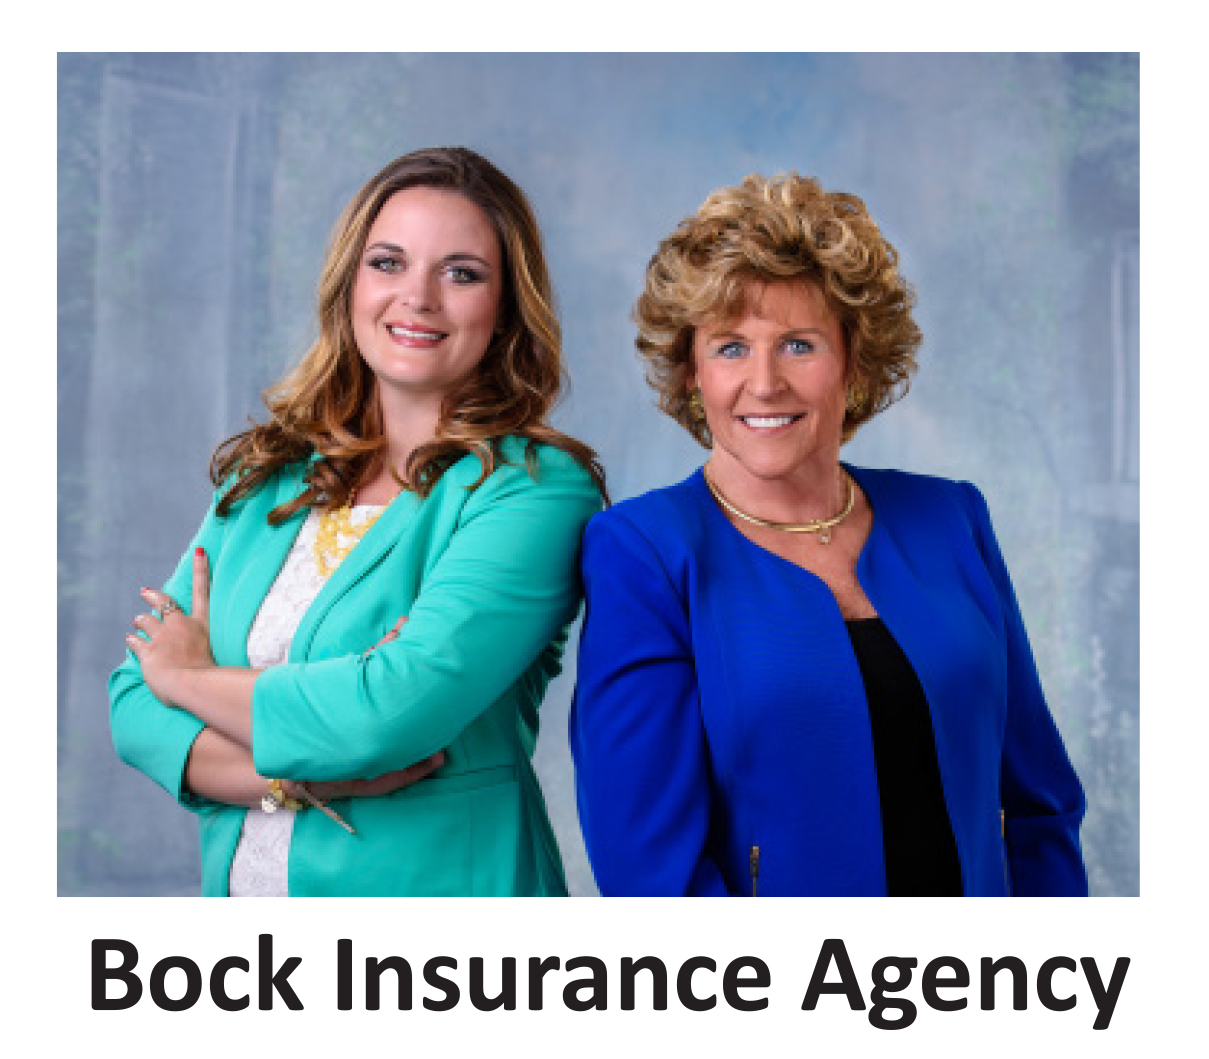 bock insurance agecy